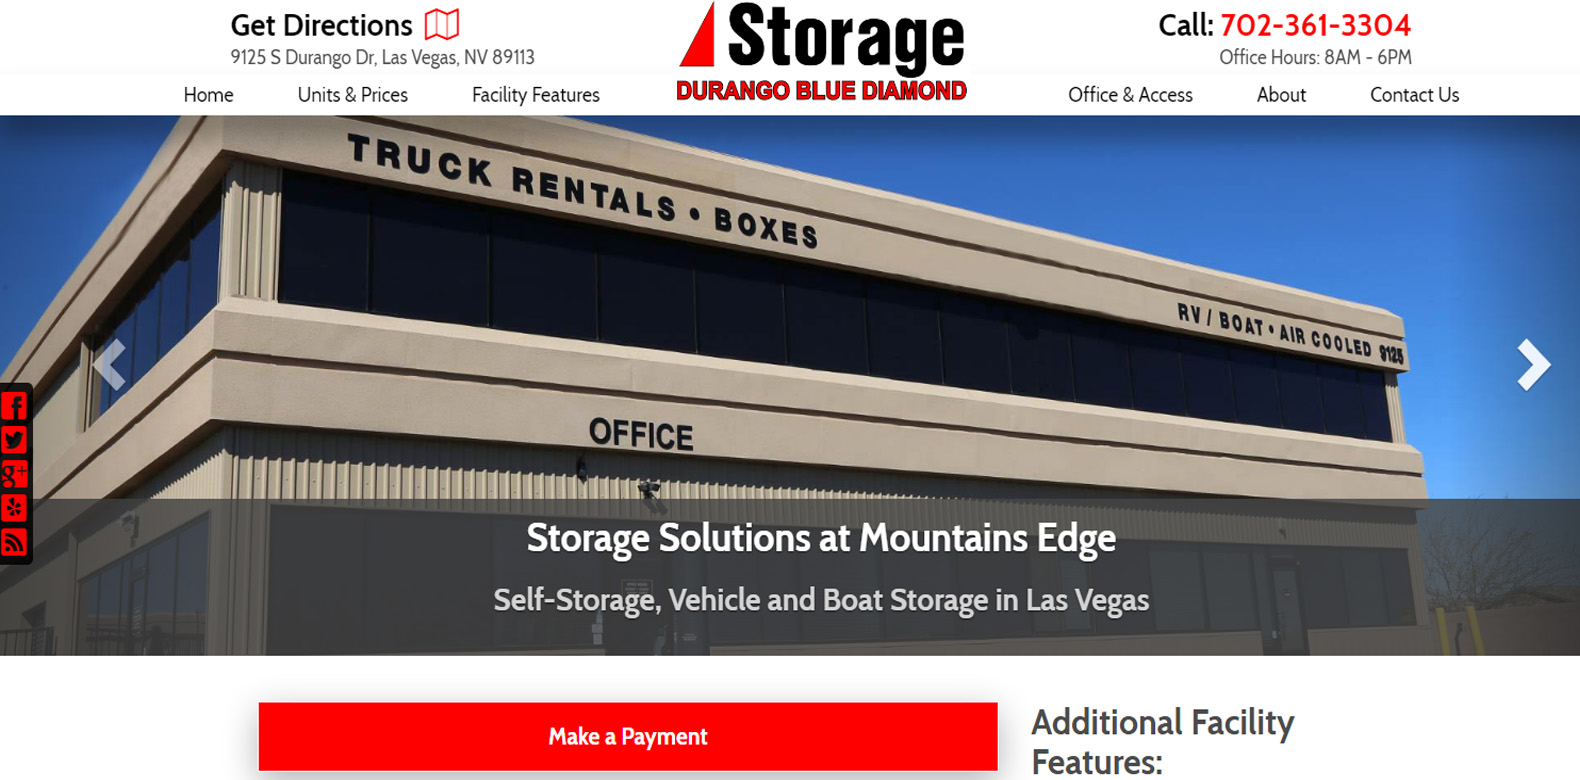 
New Website Launch: Storage Durango Blue Diamond